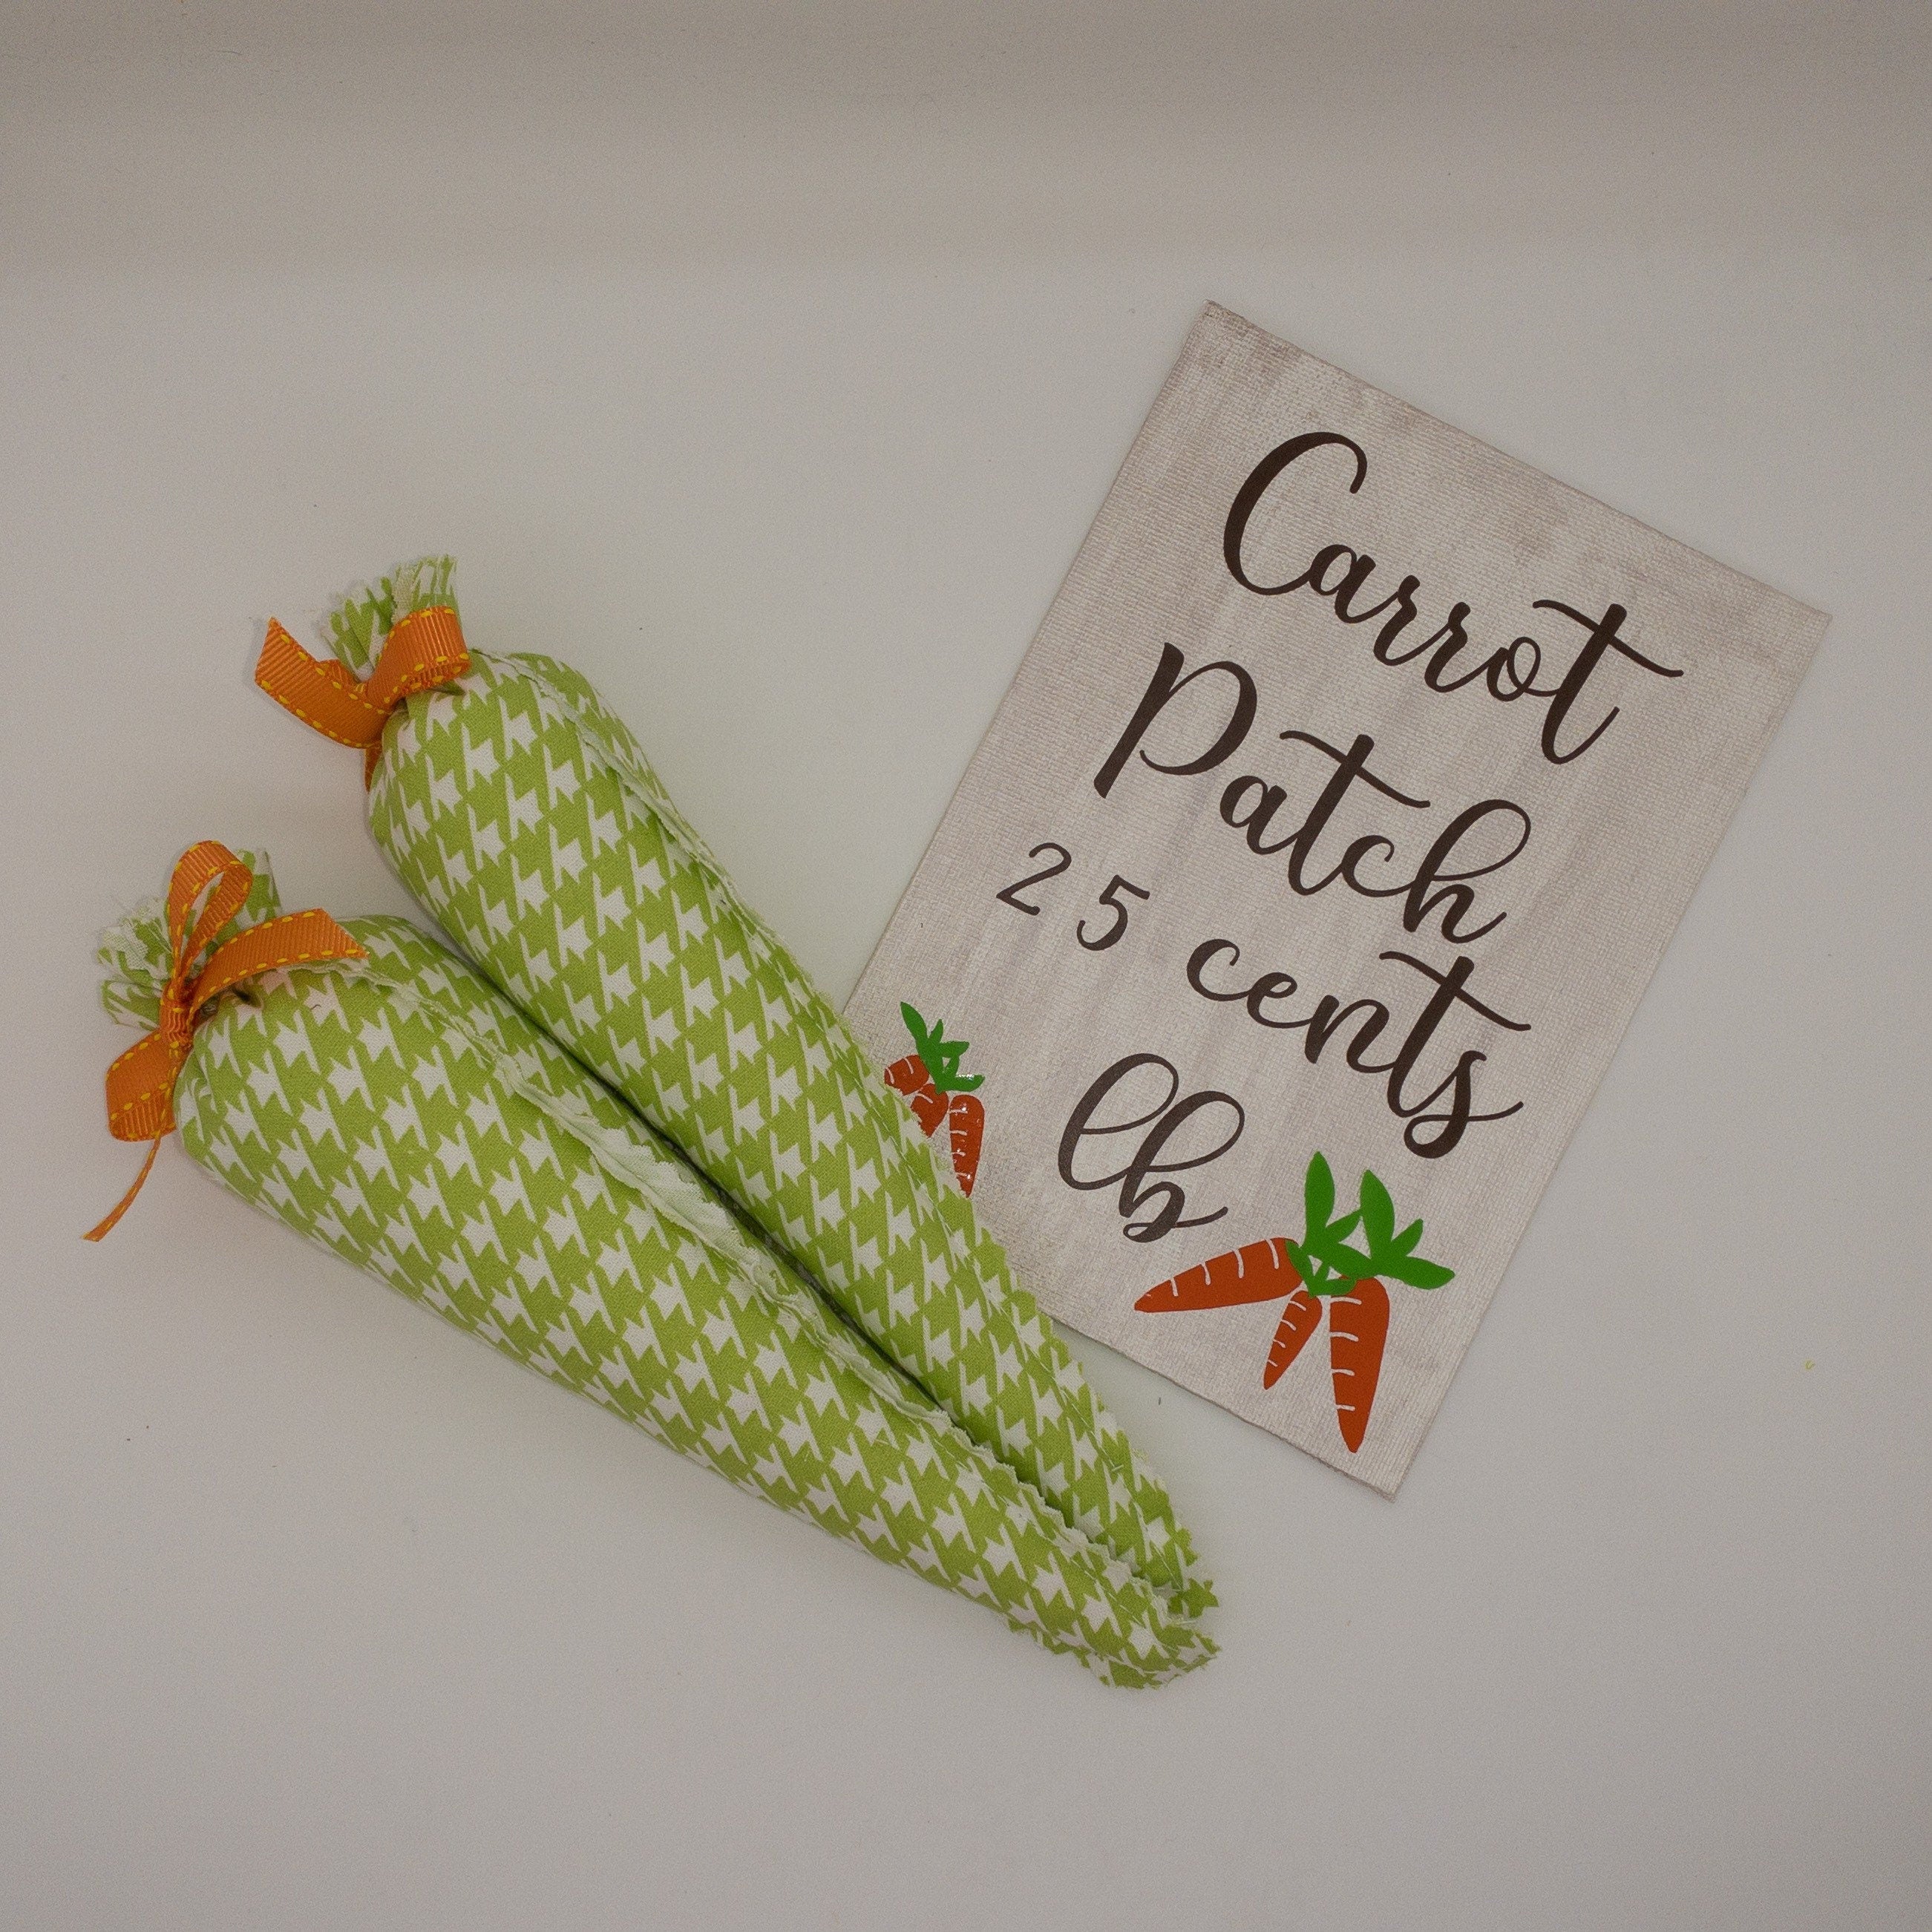 Easter Carrots|Handmade Fabric Carrots|Fabric Easter Carrots|Easter Basket Filler|Tiered Tray Decor|Spring Decor|Wreath Filler|Rustic Carrot